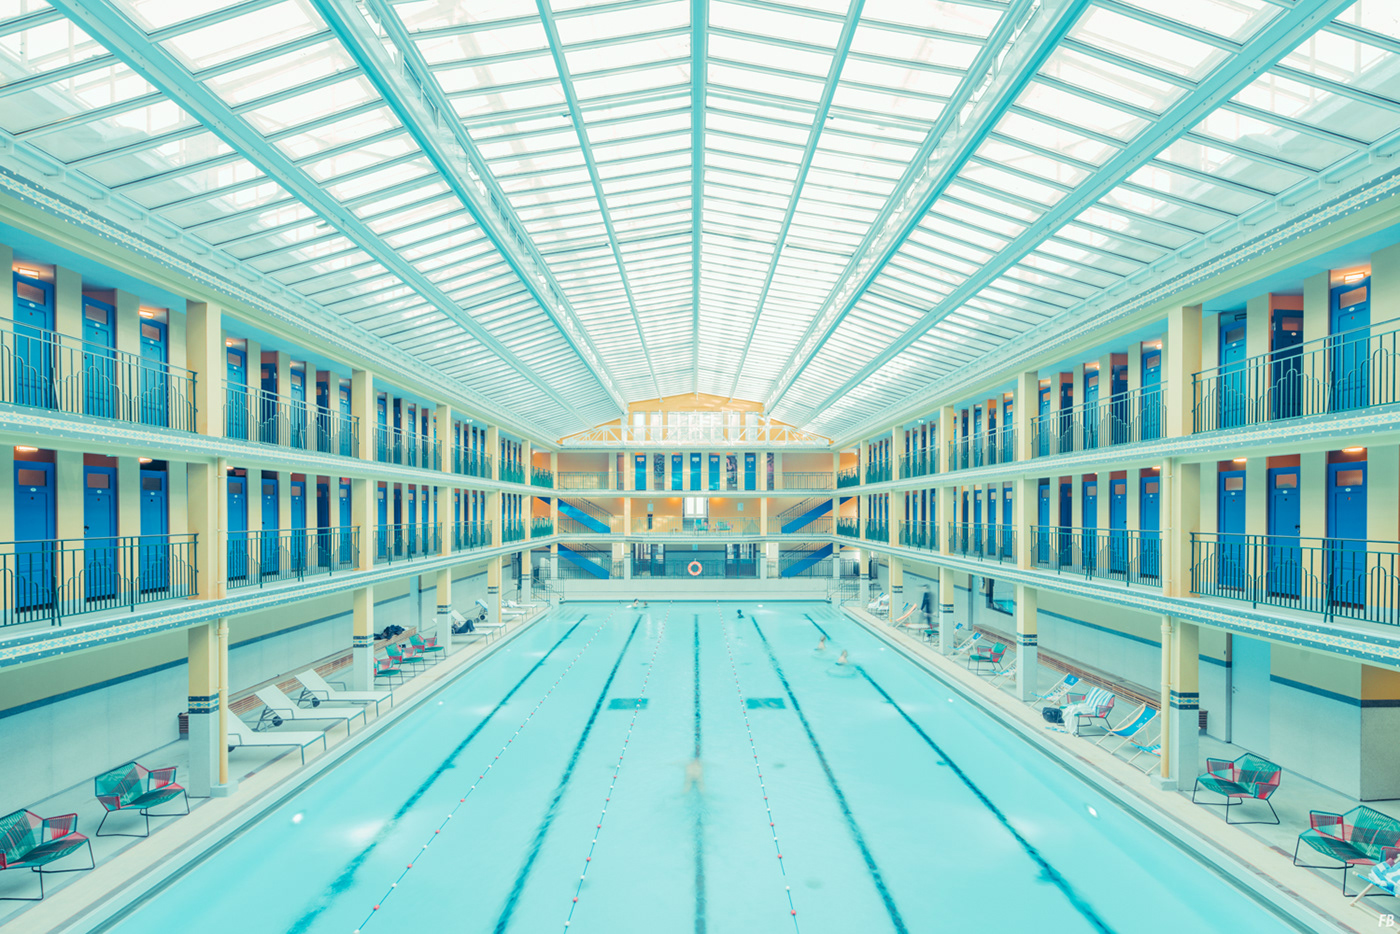 Swimmingpool architecture lifestyle design blue yellow orange symmetry lines Paris